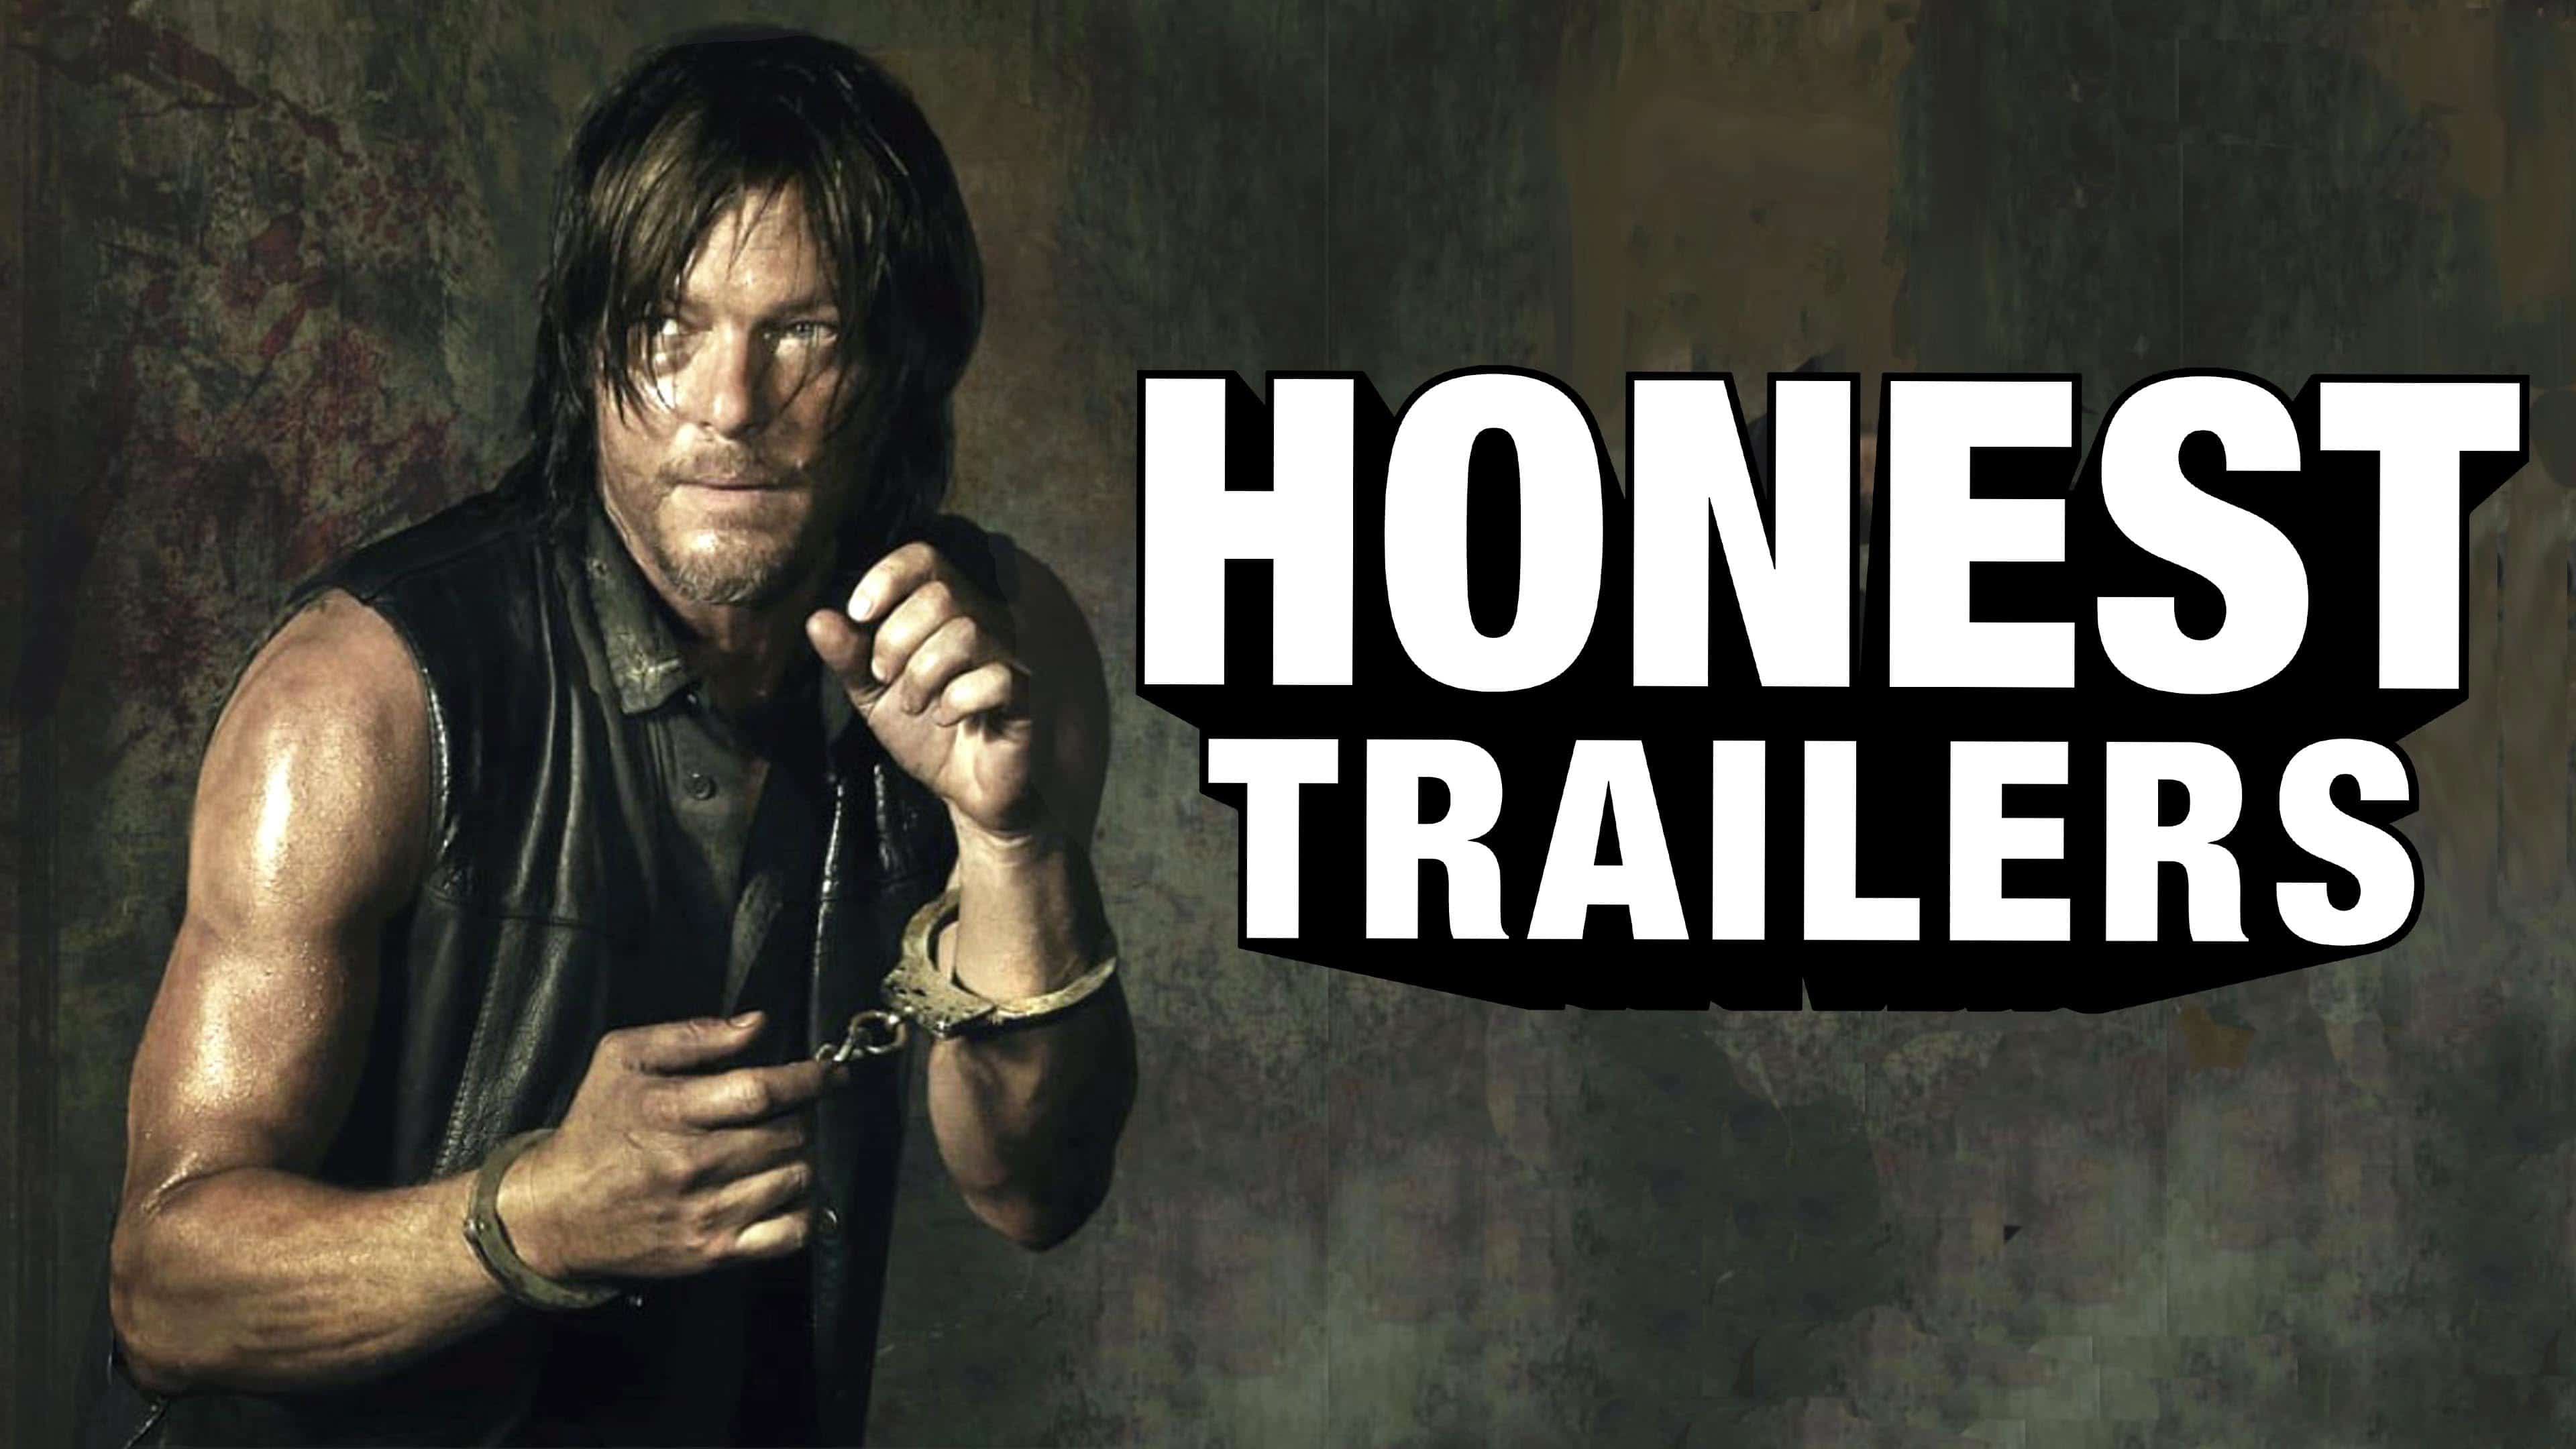 Honest trailer for "The Walking Dead": Seasons 4 to 6